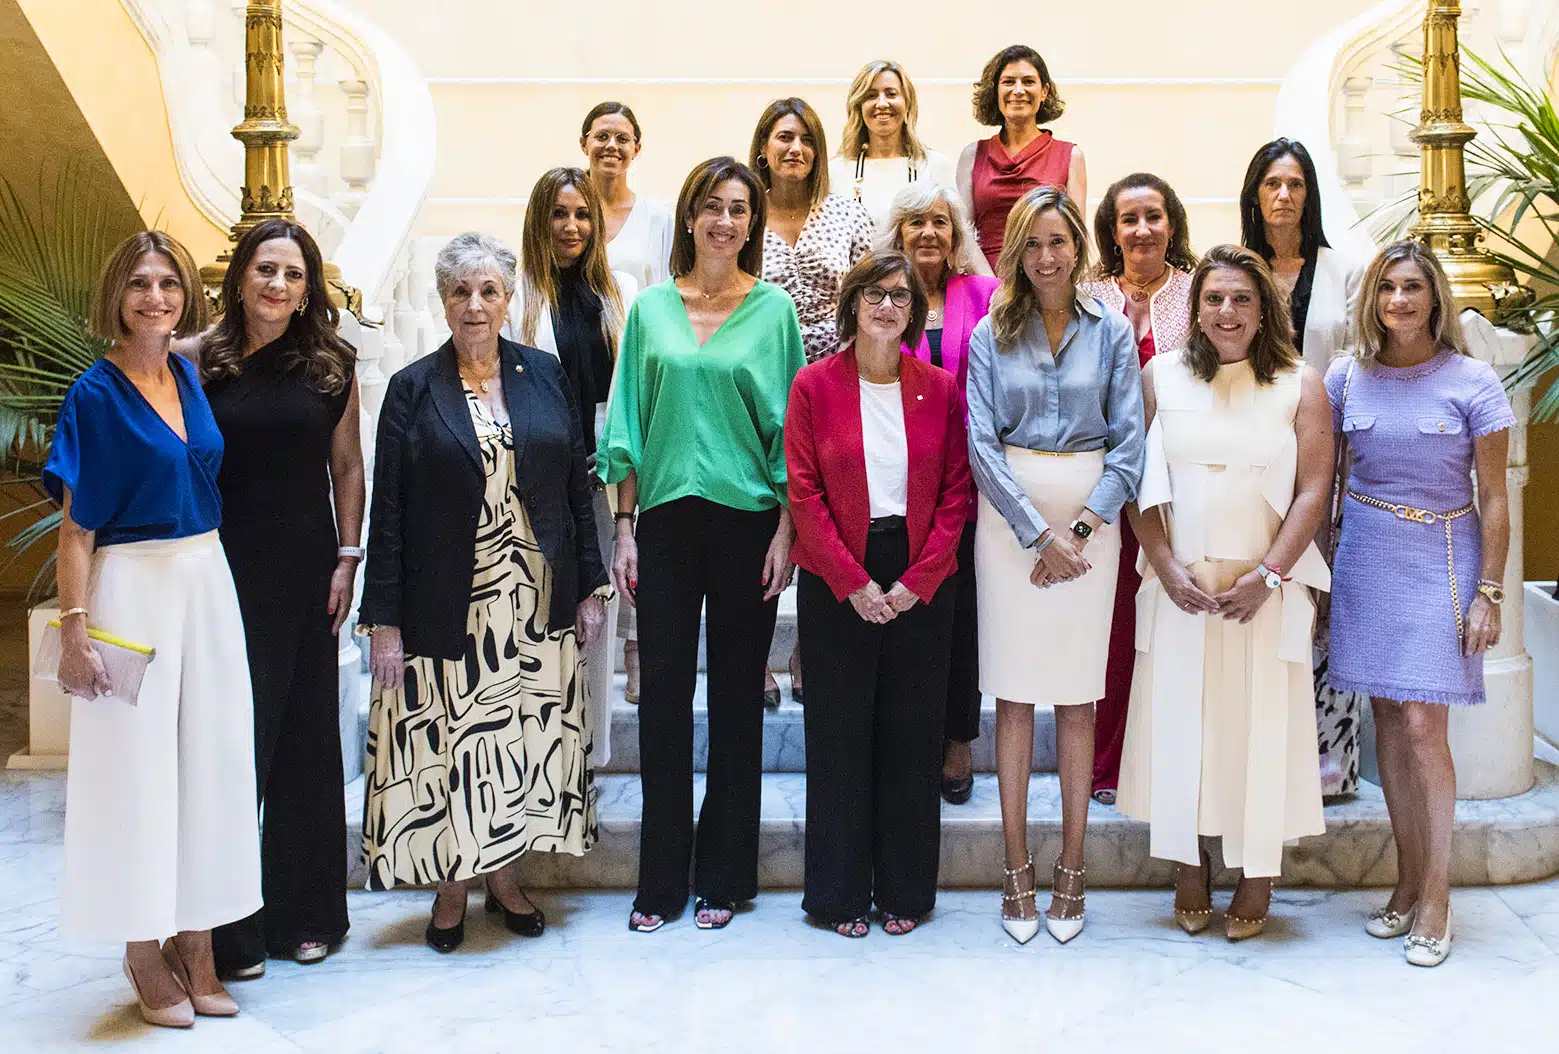 Women in a Legal World desembarca en Barcelona para visibilizar el talento femenino